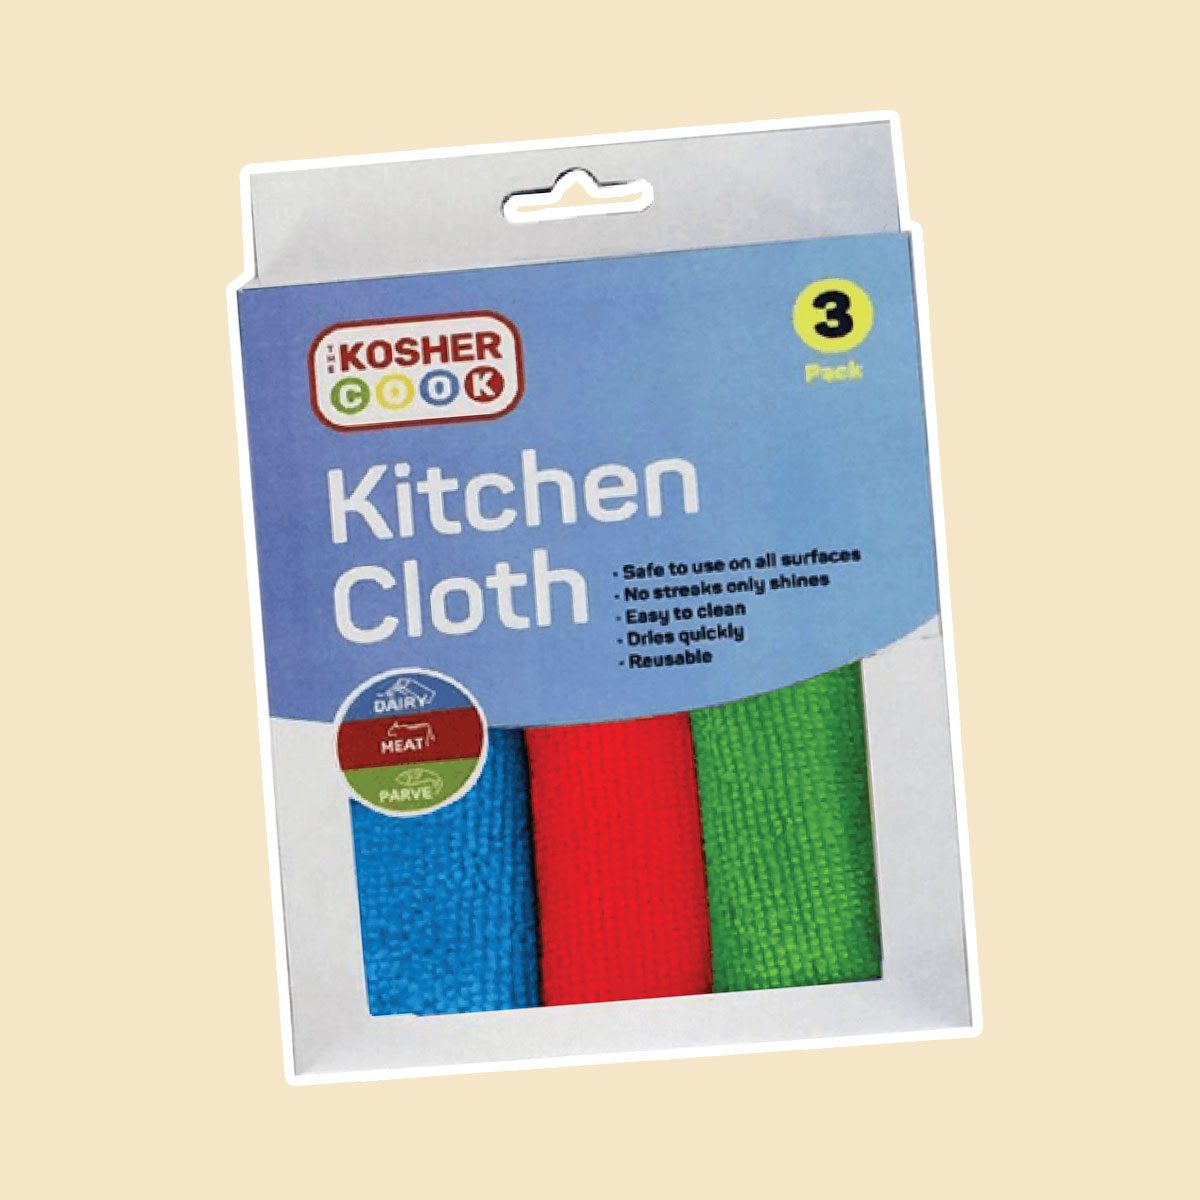 https://www.tasteofhome.com/wp-content/uploads/2020/05/kitchen-cloth.jpg?fit=700%2C700